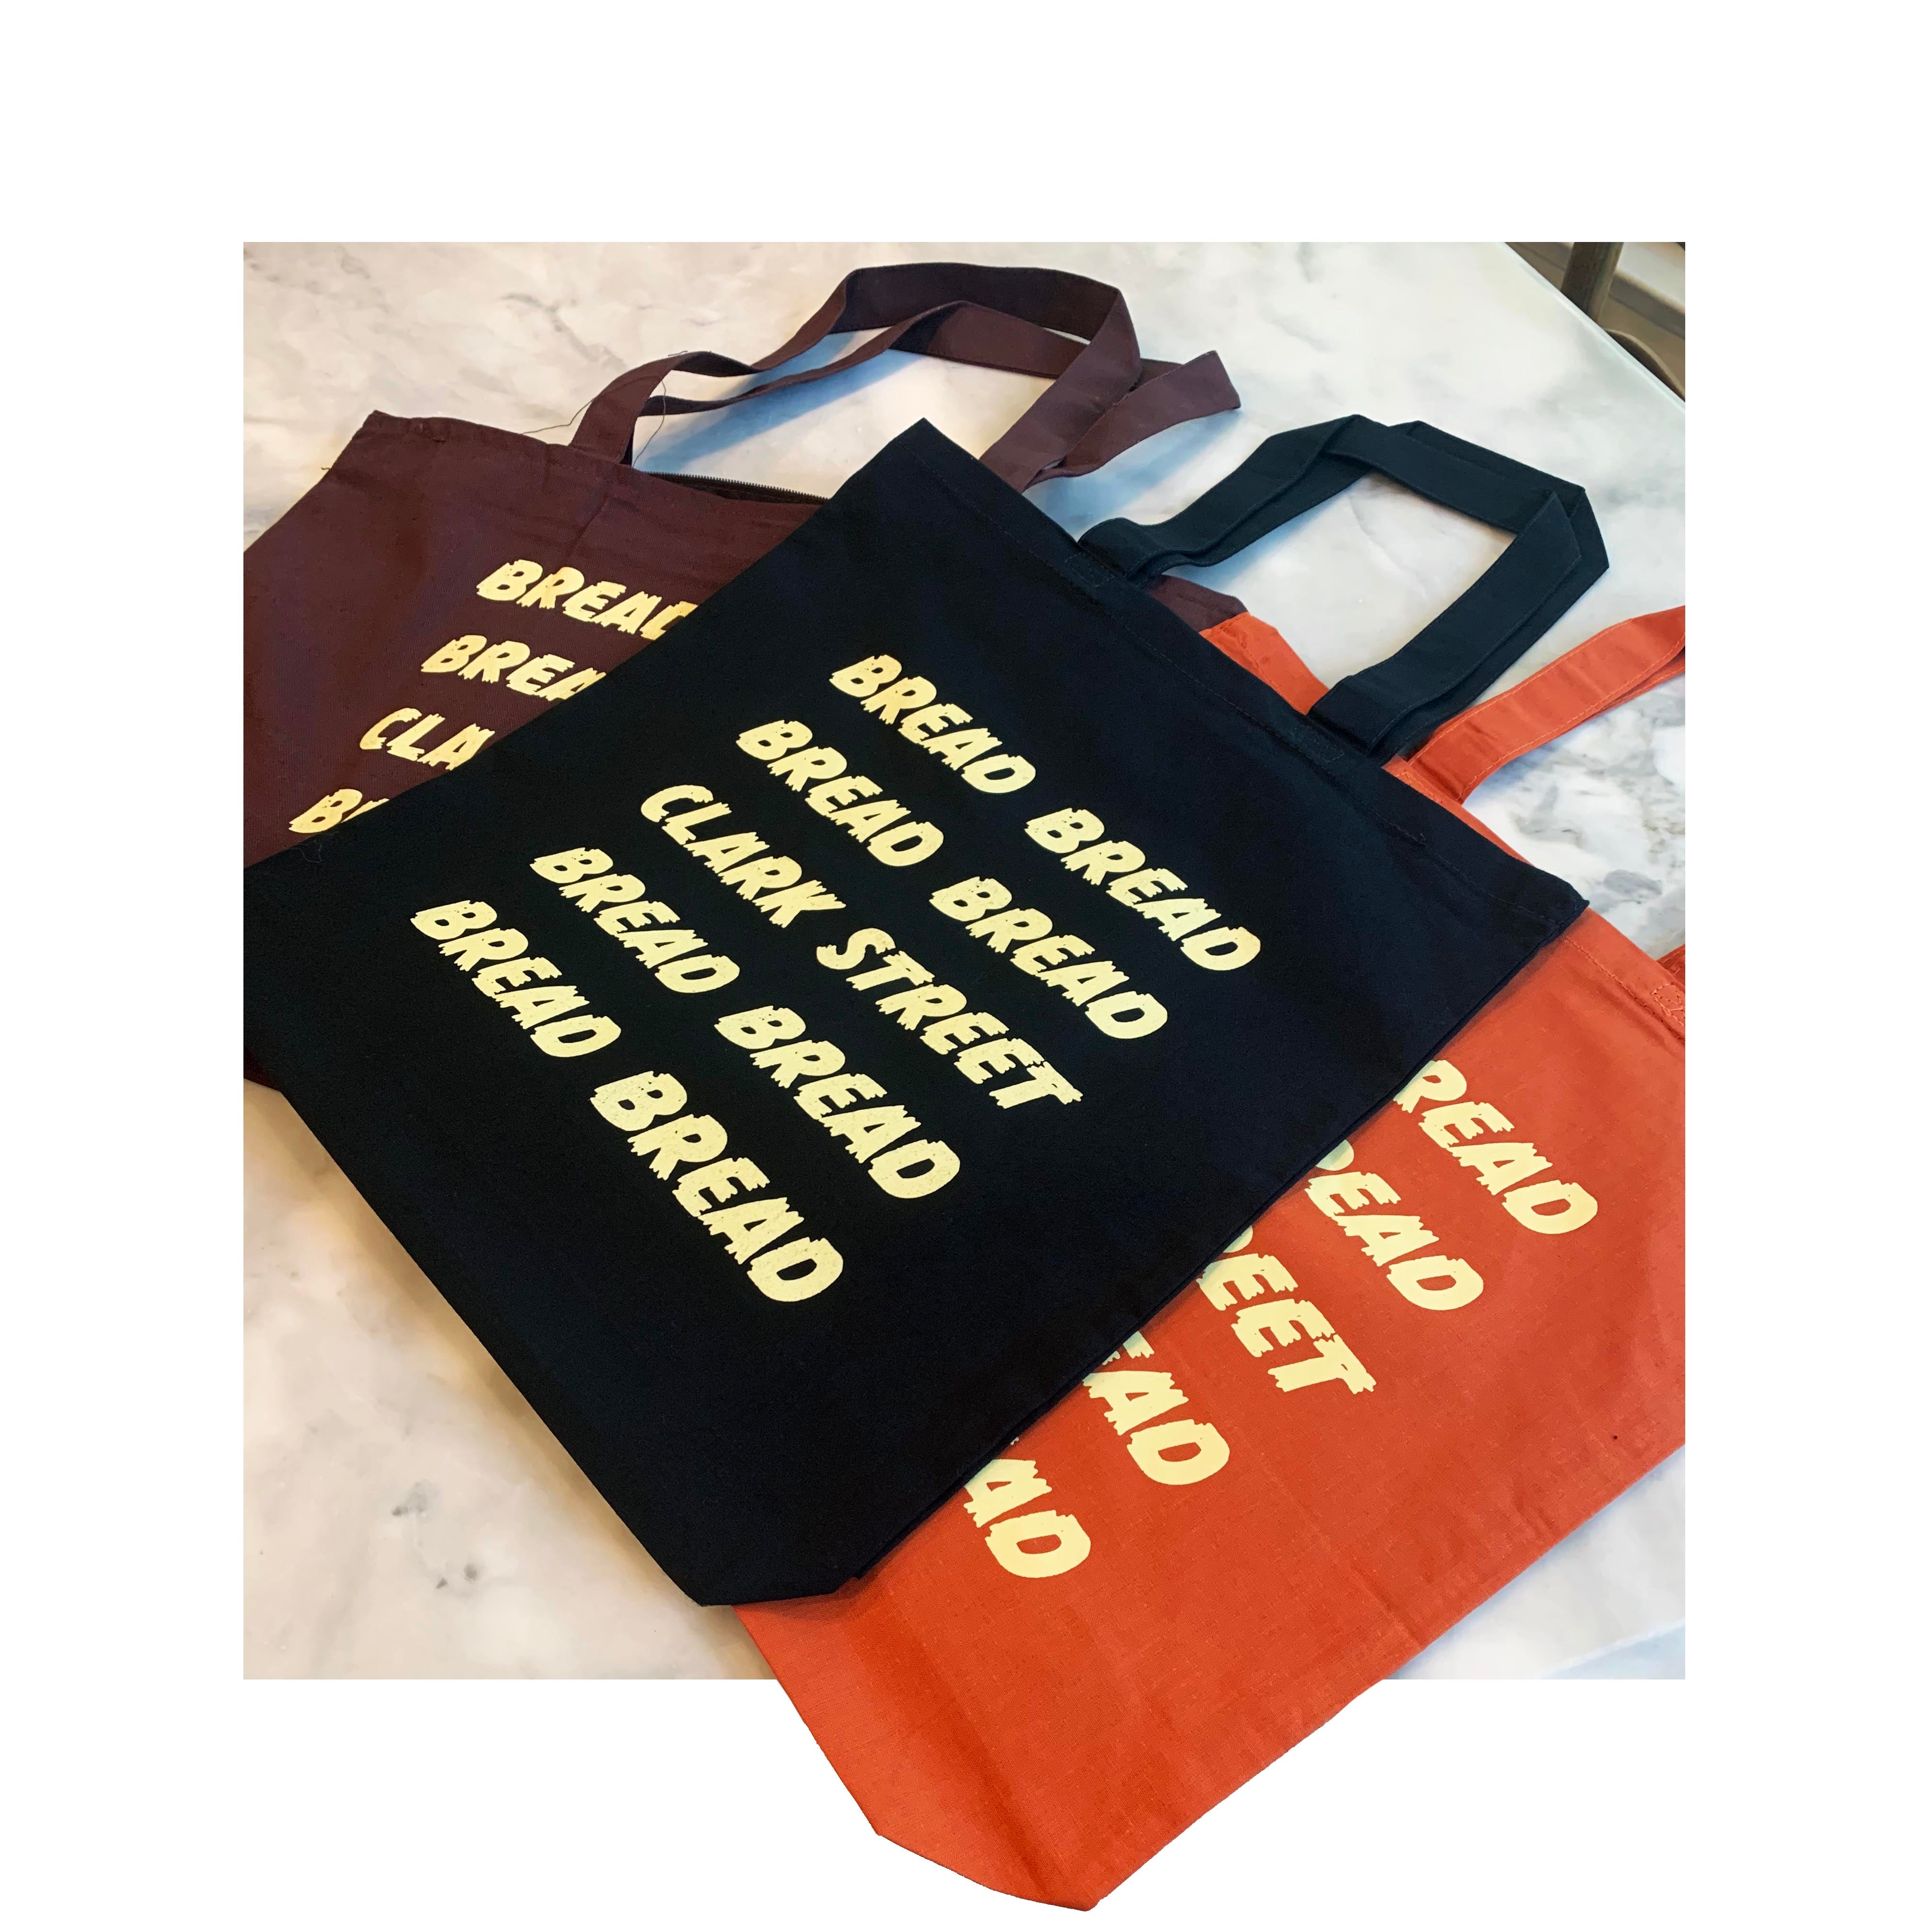 Comic print shopping bag tote,Canvas Tote Bags,1 pc Tote Bags